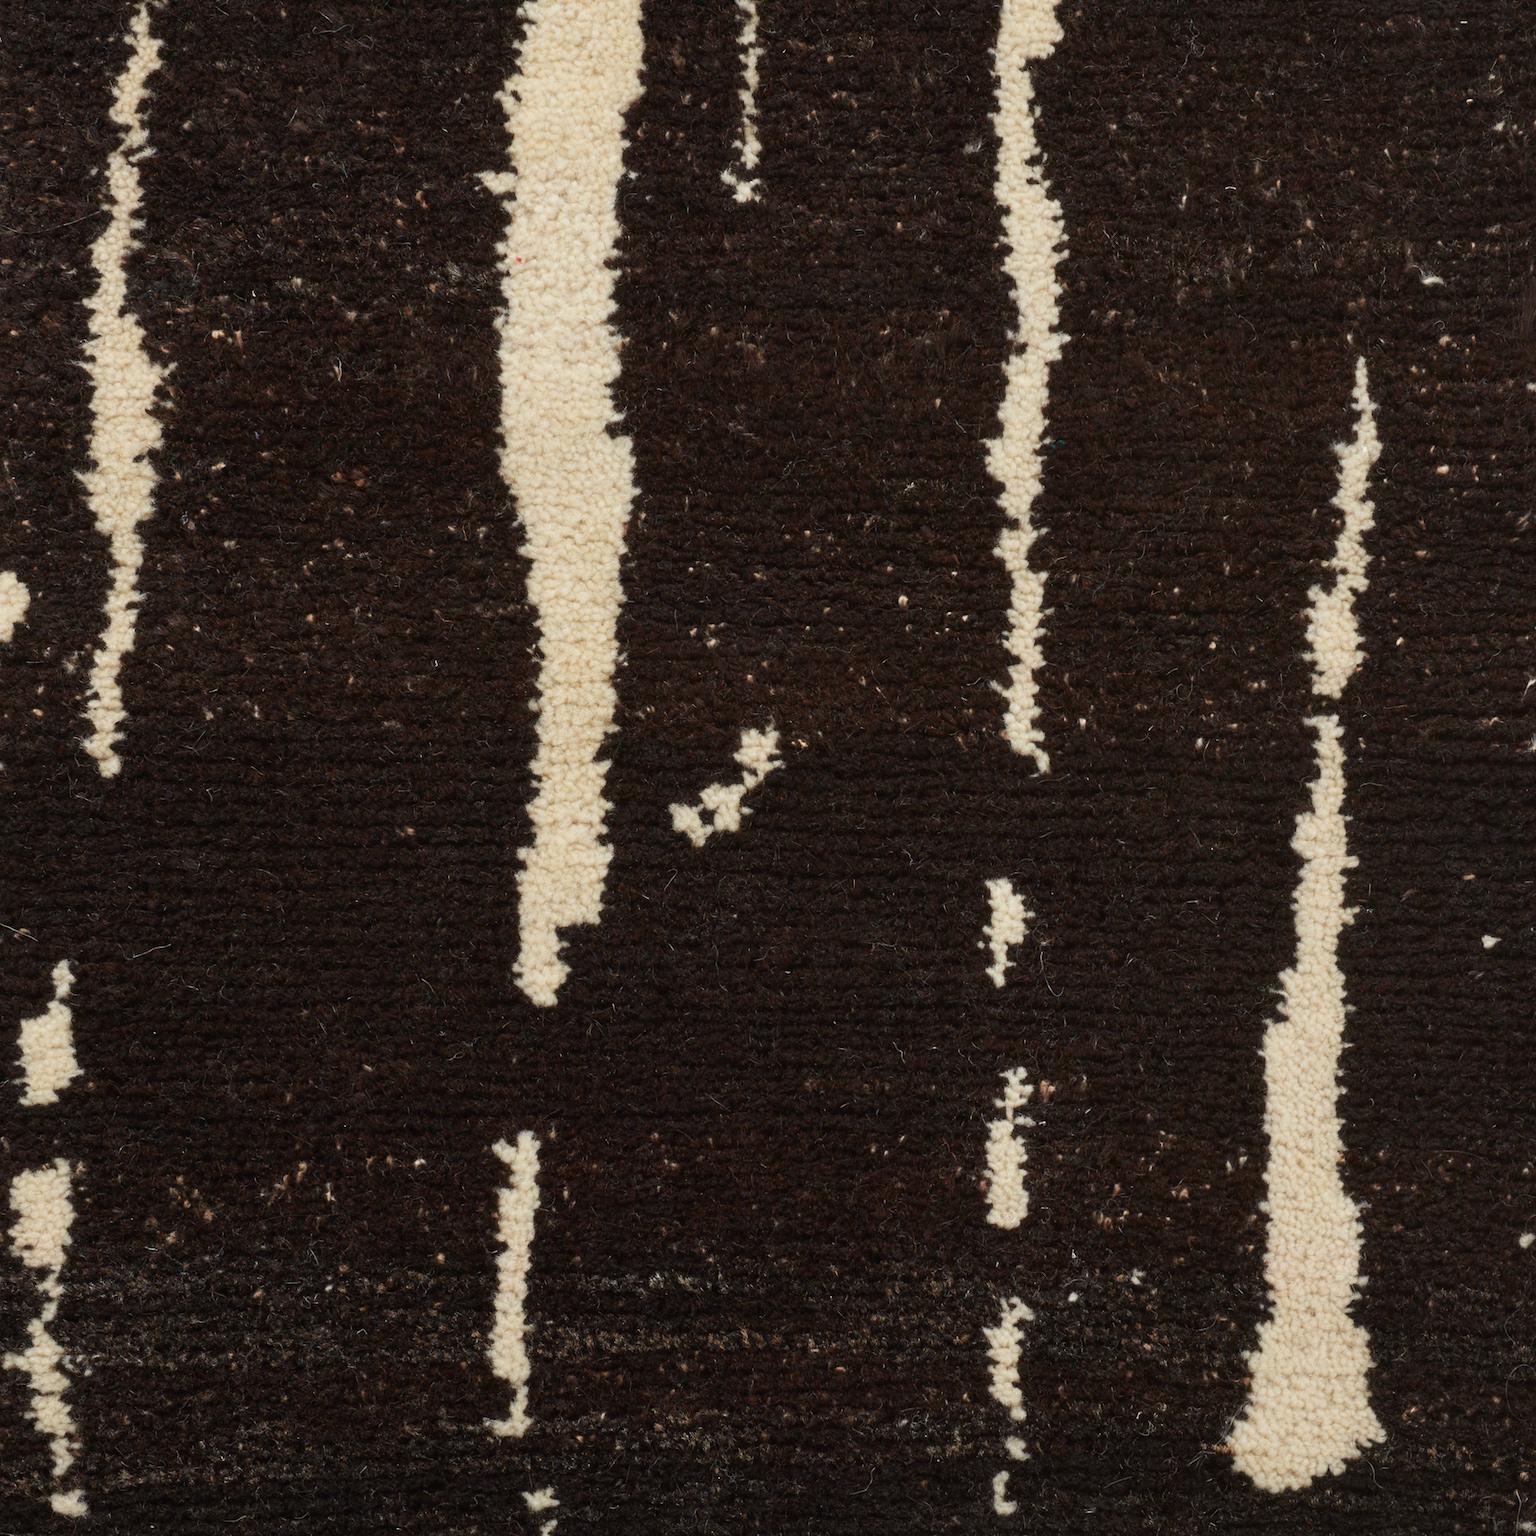 Rugs and floor coverings
 
Rug pattern: Bark
Dimensions: 8'9